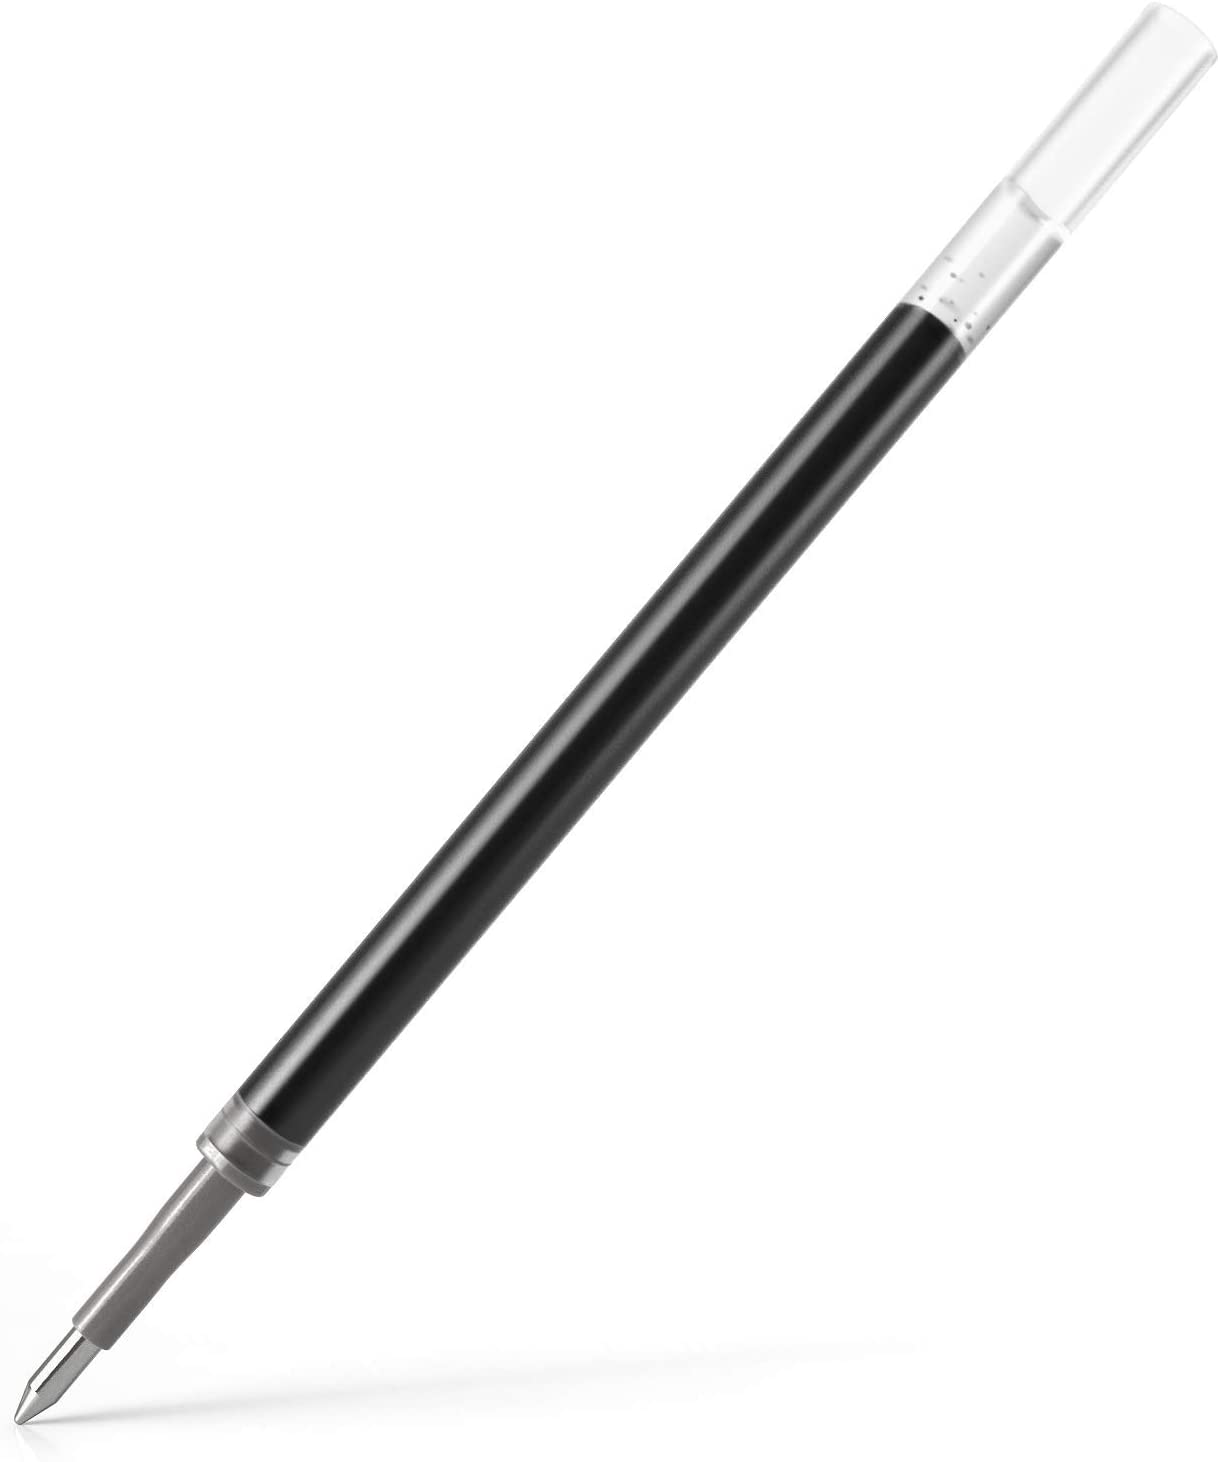 B2P 5ct Gel Pens Fine Tip Black Ink + 2 Refill